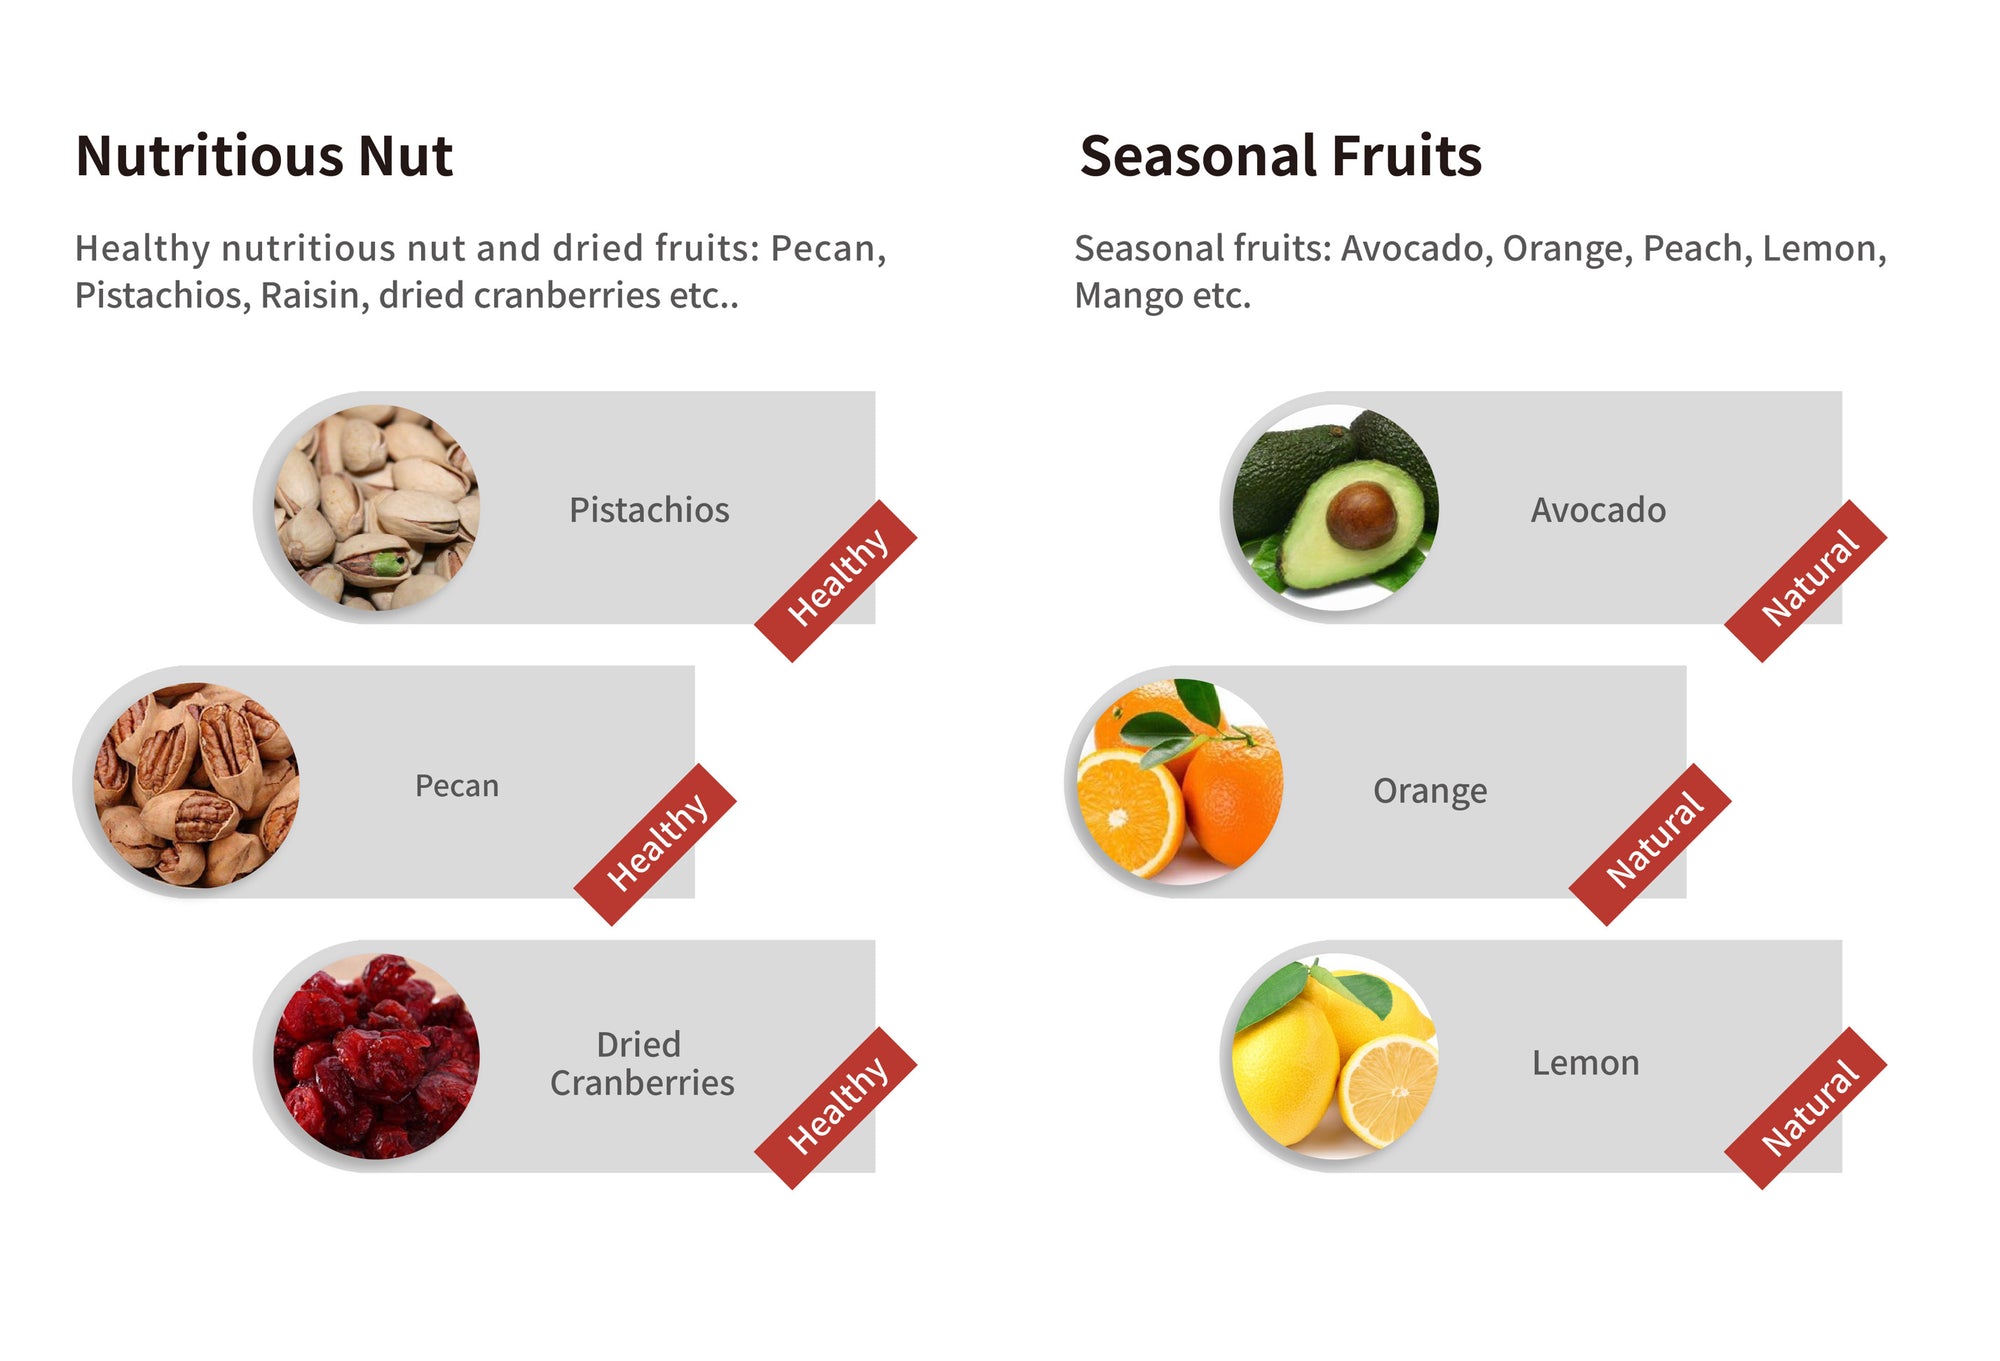 nutritious nut, pistachios, pecan, dried cranberries, seasonal fruits, avocado, orange, lemon